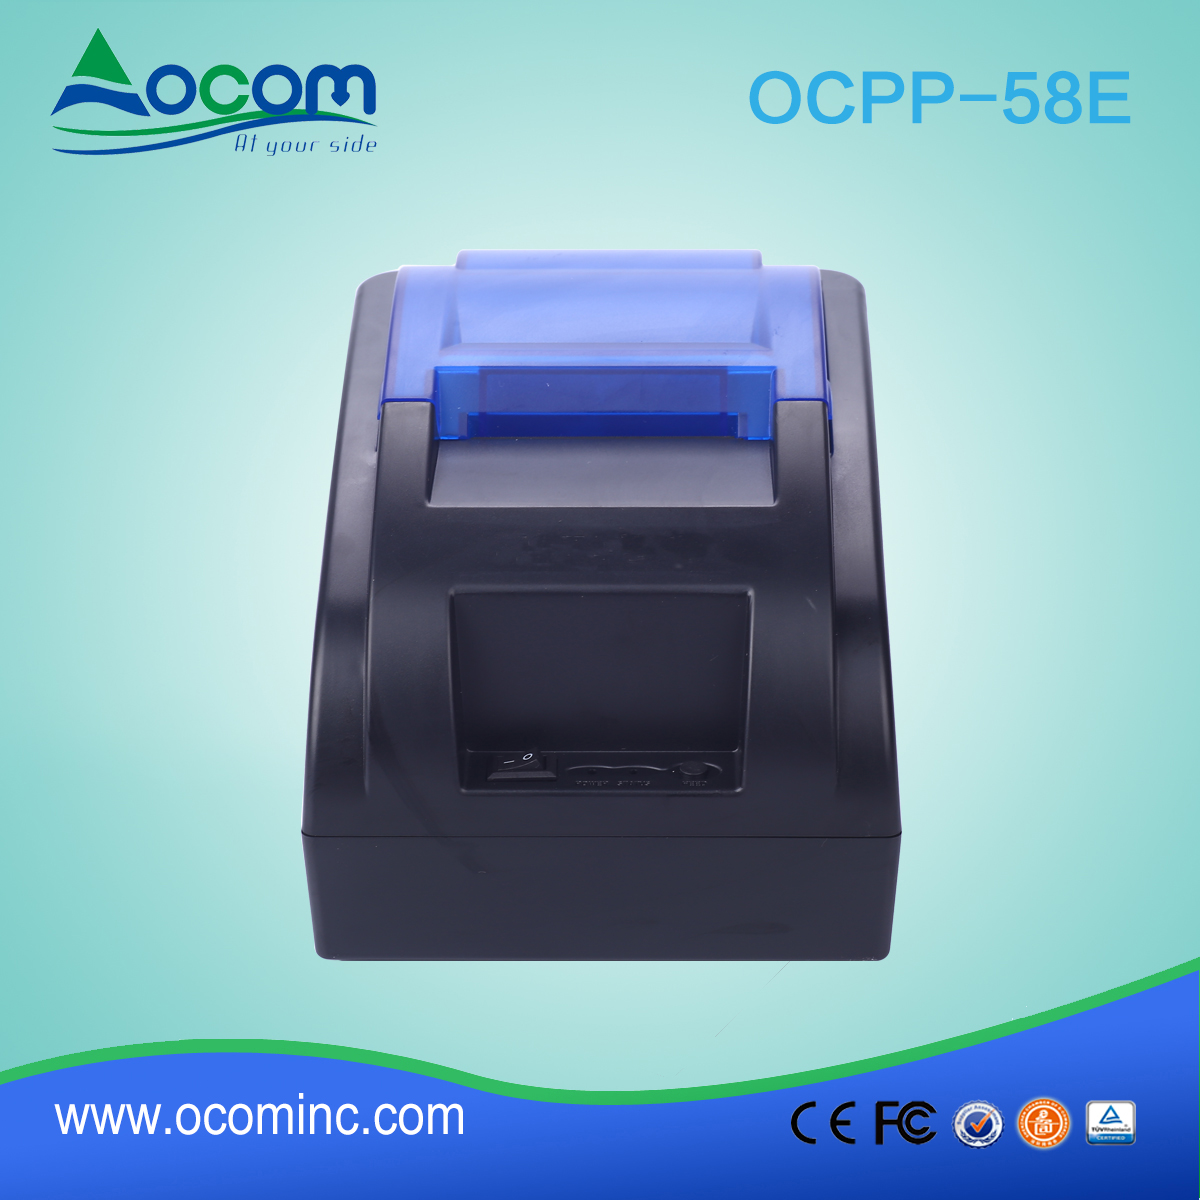 OCPP-58E-Small дешевый 58-миллиметровый принтер для принтеров POS